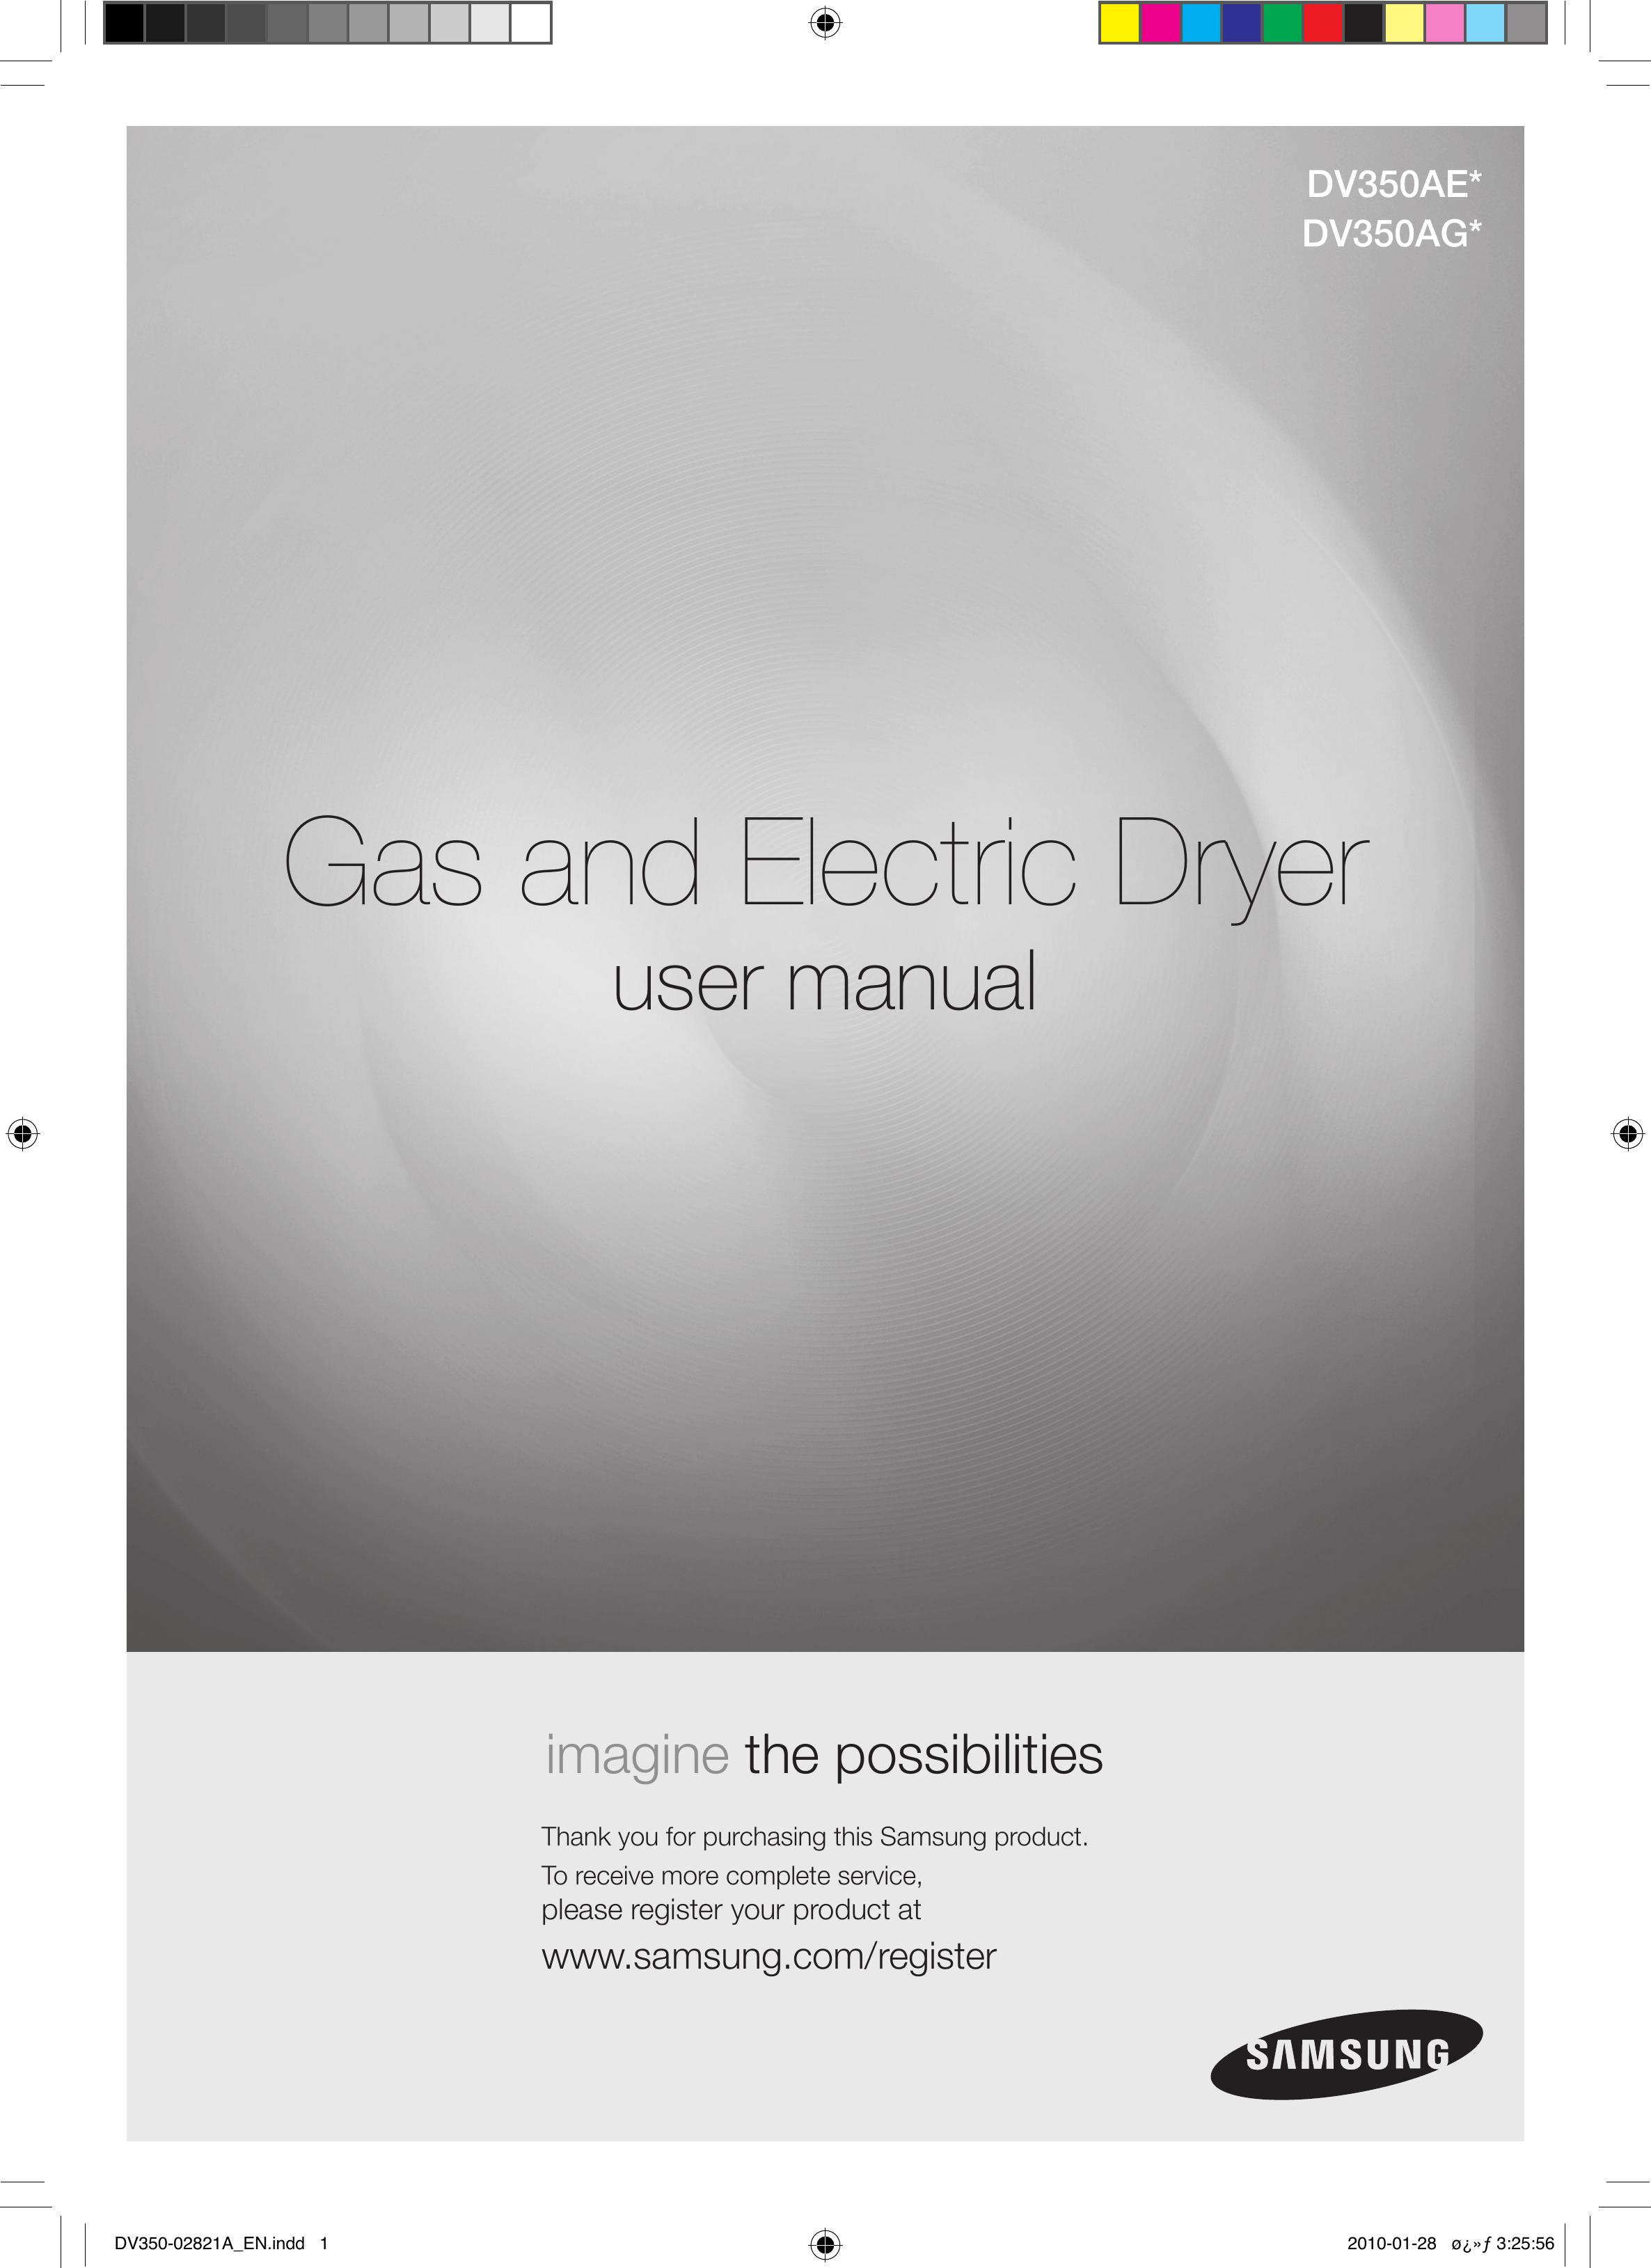 Samsung DV350AG* Clothes Dryer User Manual